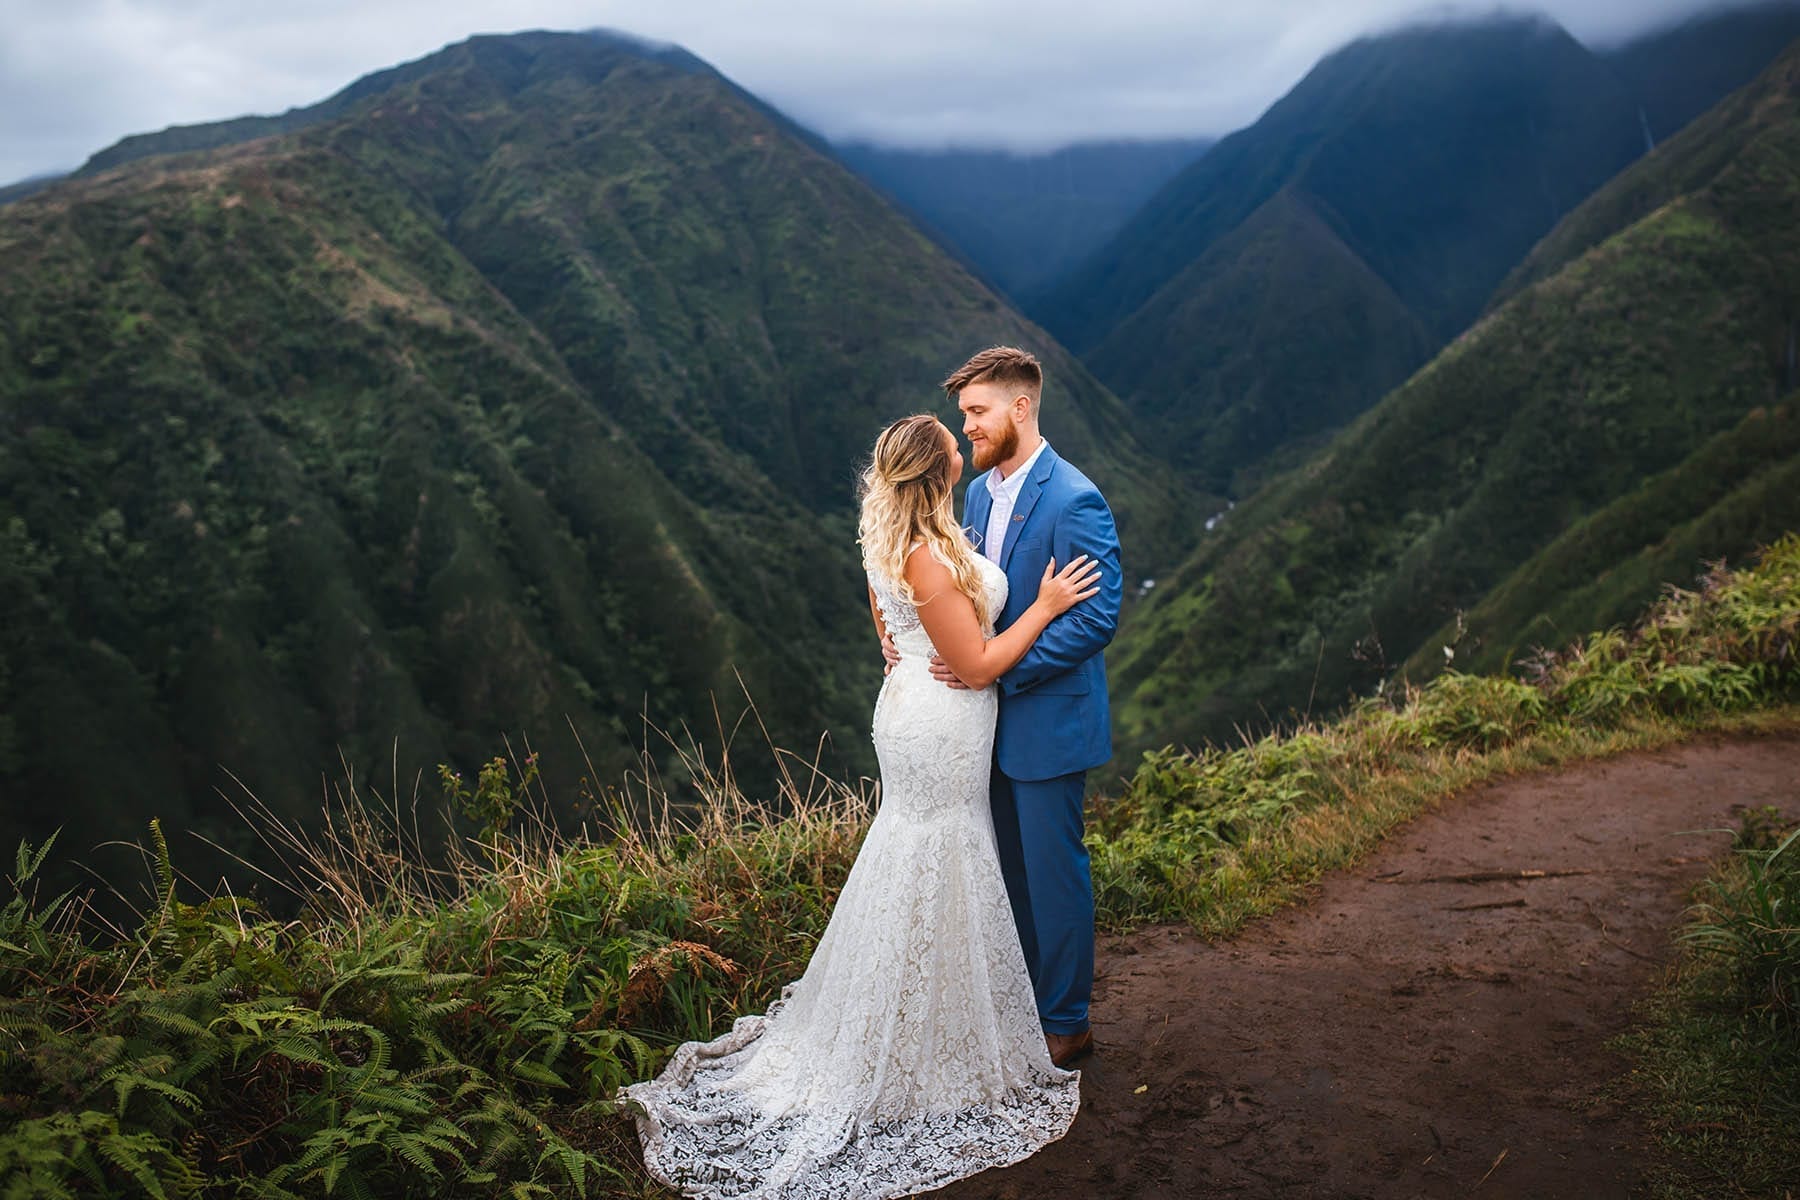 Mountain adventure elopement in Maui Hawaii